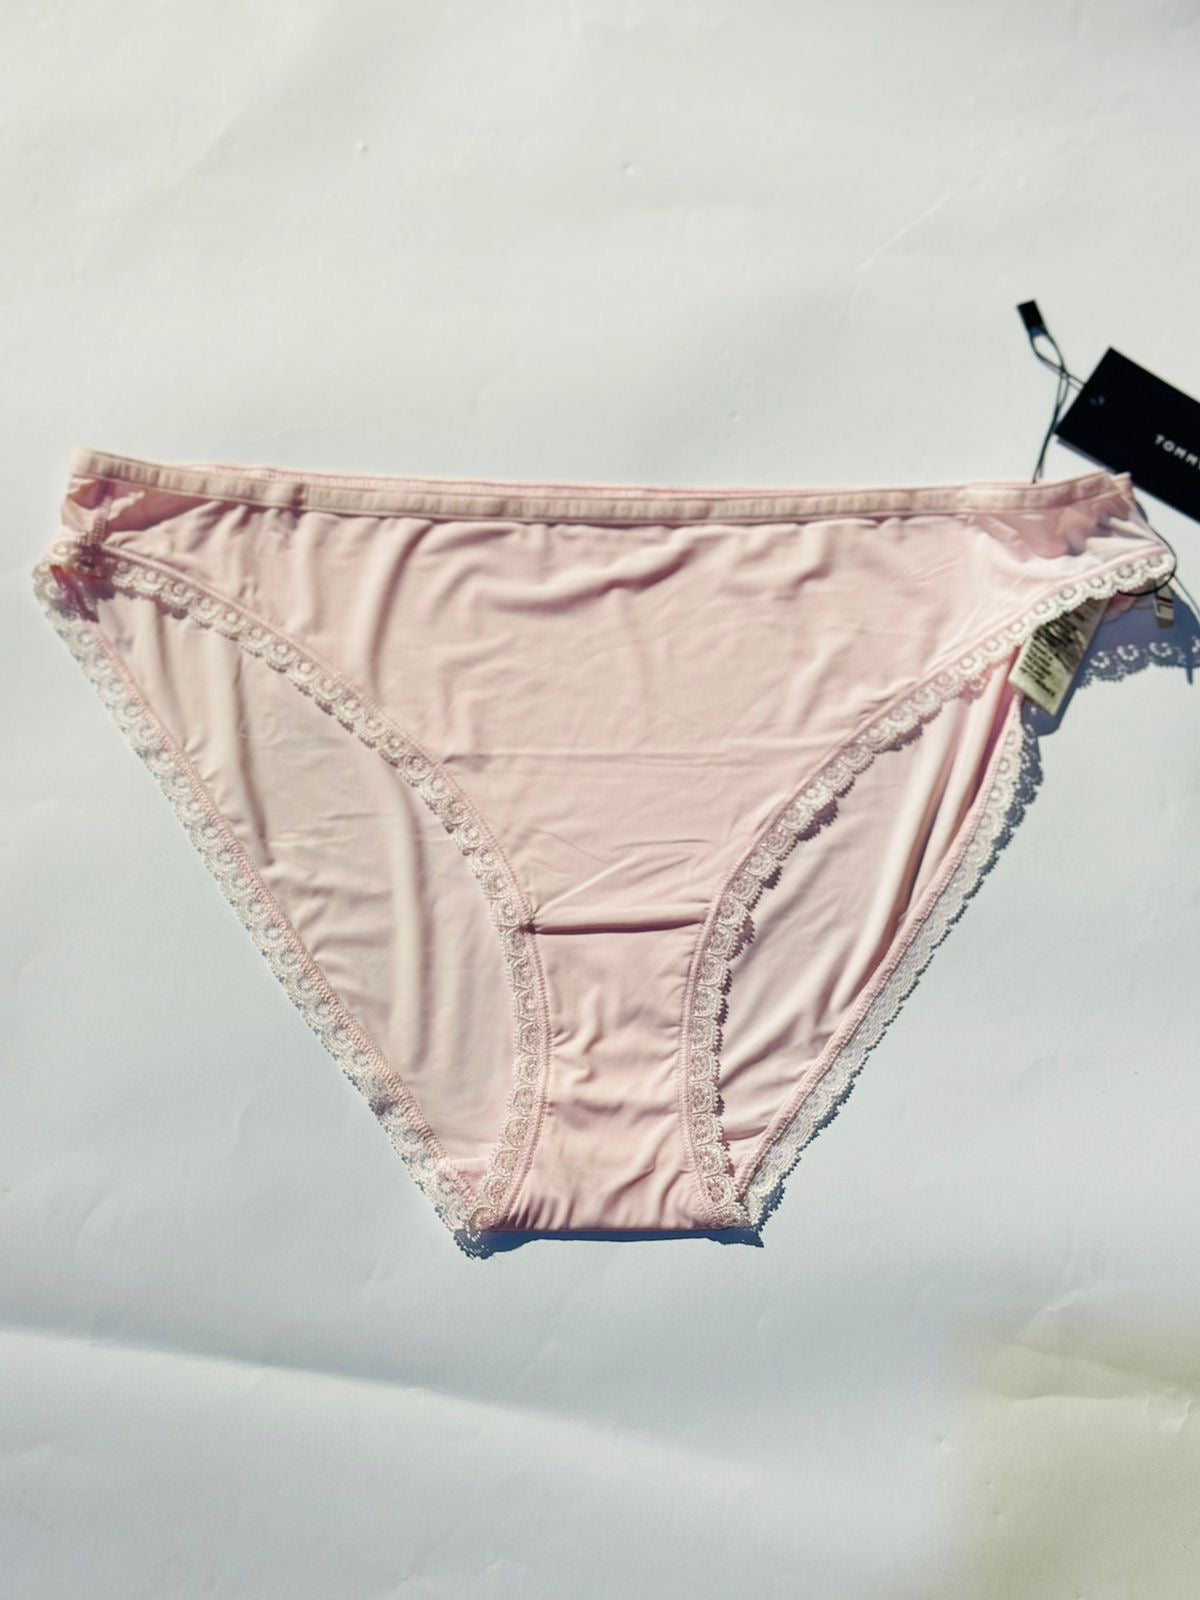 Tommy Hilfiger underwear size large